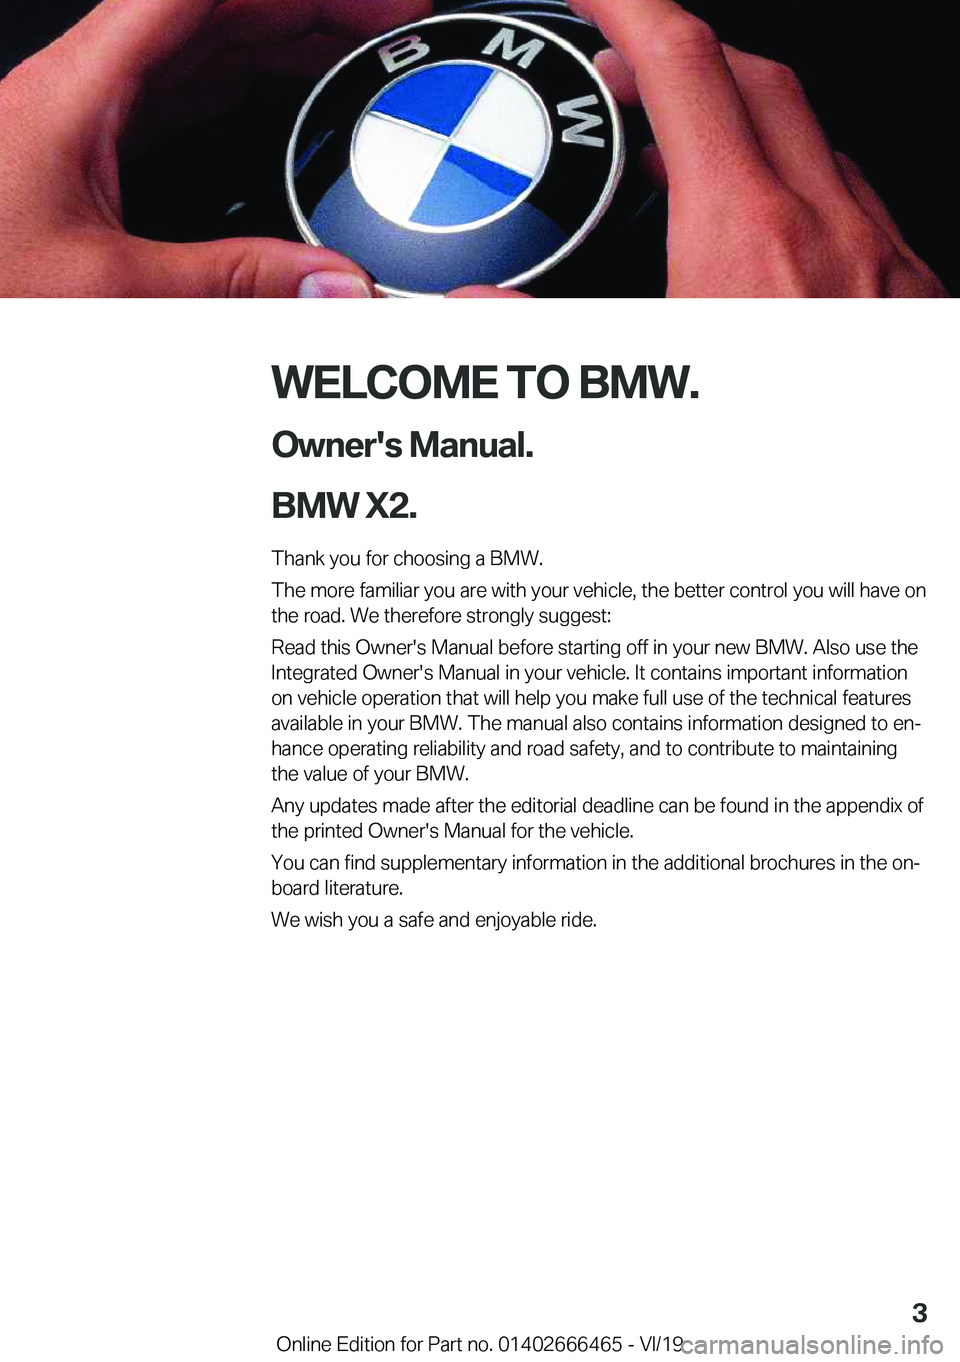 BMW X2 2020  Owners Manual �W�E�L�C�O�M�E��T�O��B�M�W�.�O�w�n�e�r�'�s��M�a�n�u�a�l�.
�B�M�W��X�2�.
�T�h�a�n�k��y�o�u��f�o�r��c�h�o�o�s�i�n�g��a��B�M�W�.
�T�h�e��m�o�r�e��f�a�m�i�l�i�a�r��y�o�u��a�r�e��w�i�t�h�